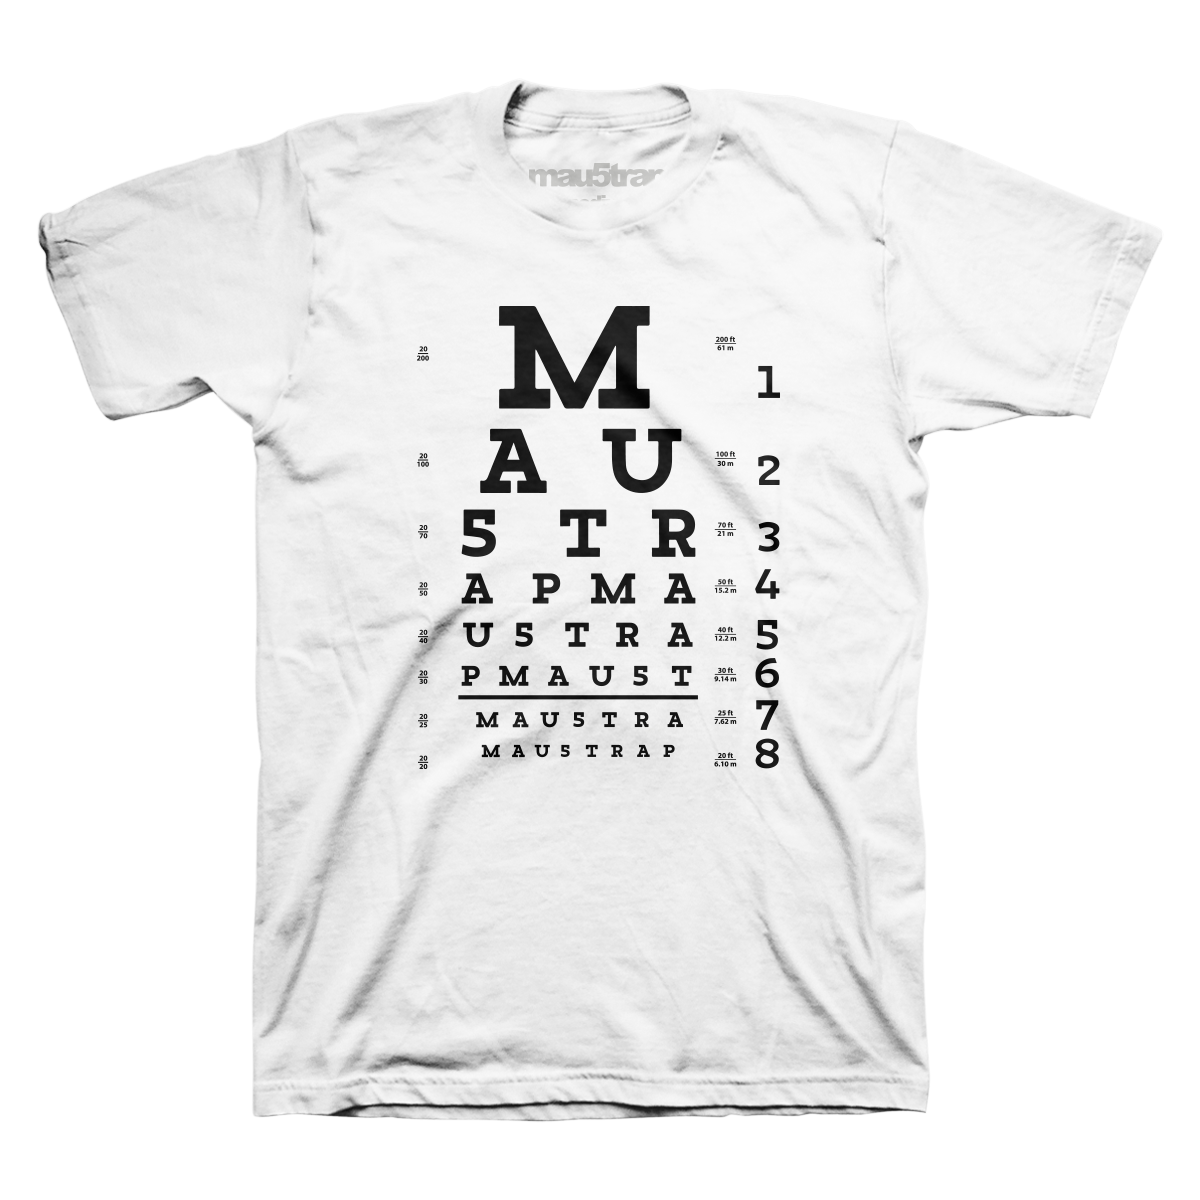 Mau5trap Optical